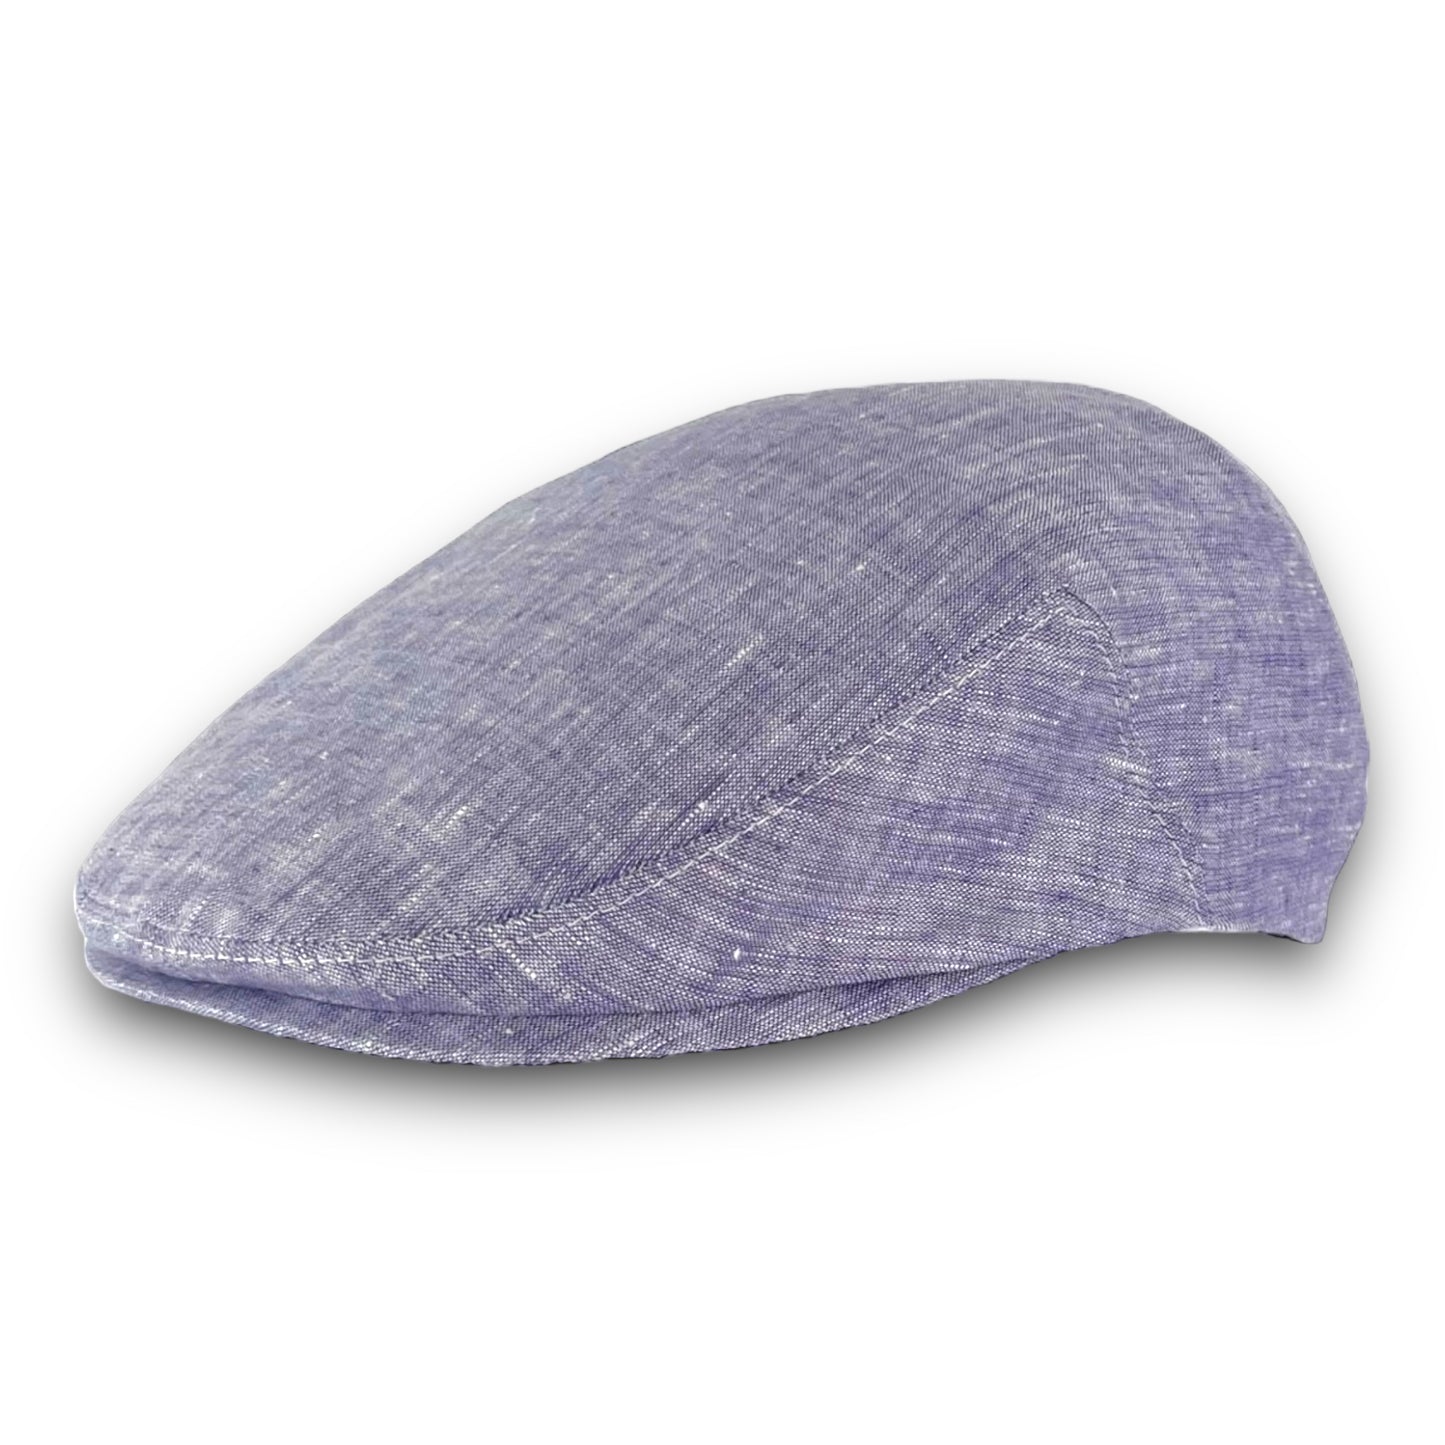 Custom Flat Cap Handmade to Order in Heathered Purple Haze Lightweight Linen Chambray